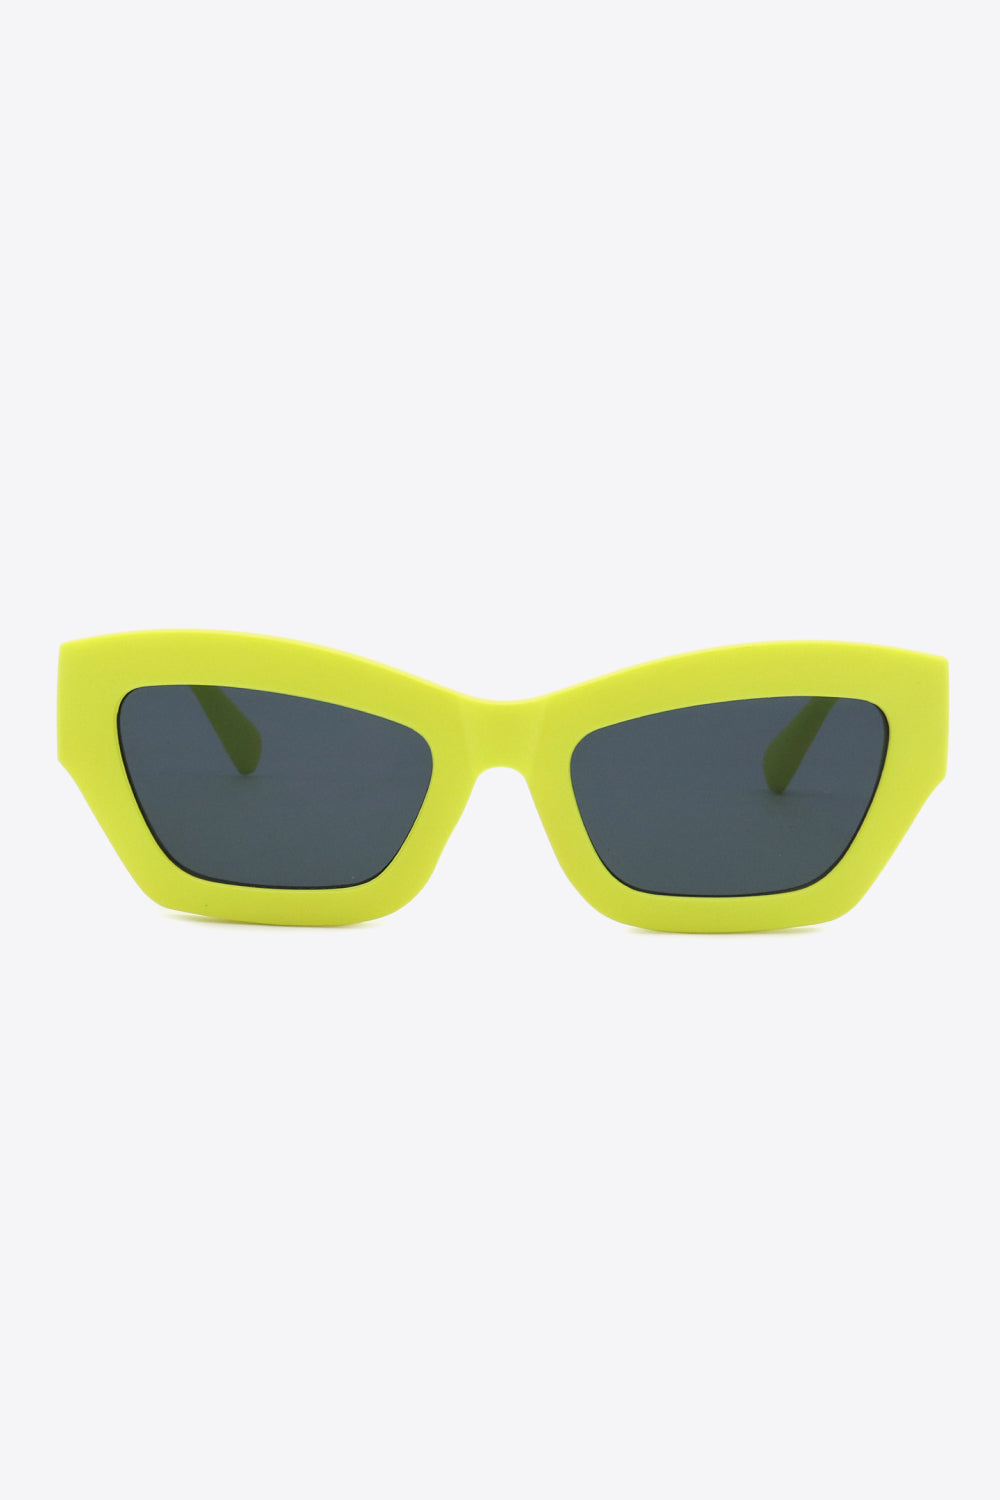 Lemon Polycarbonate Frame Sunglasses